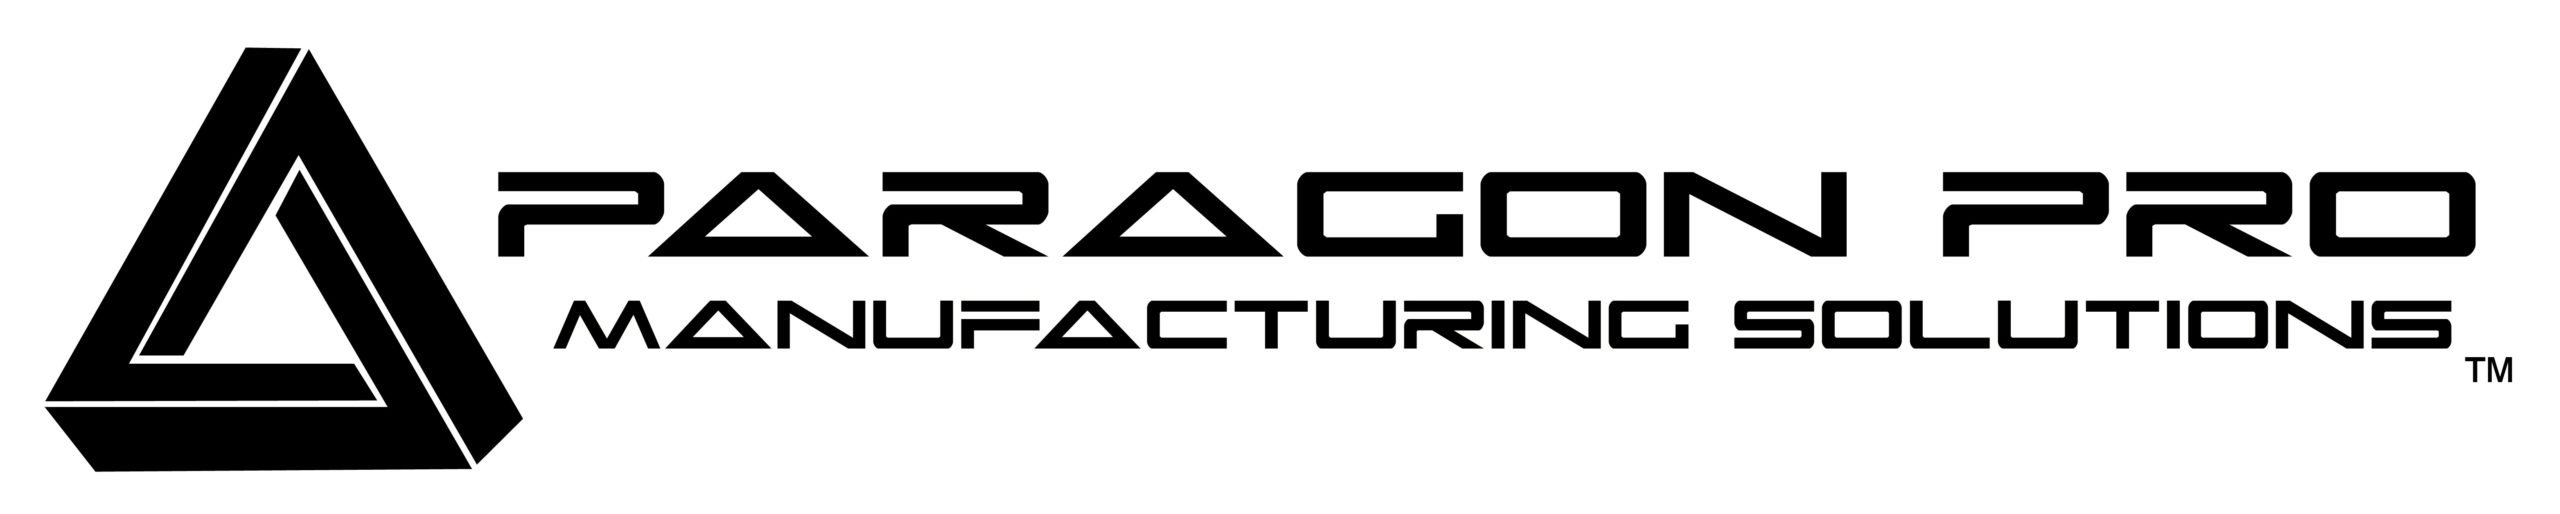 Paragon Pro logo